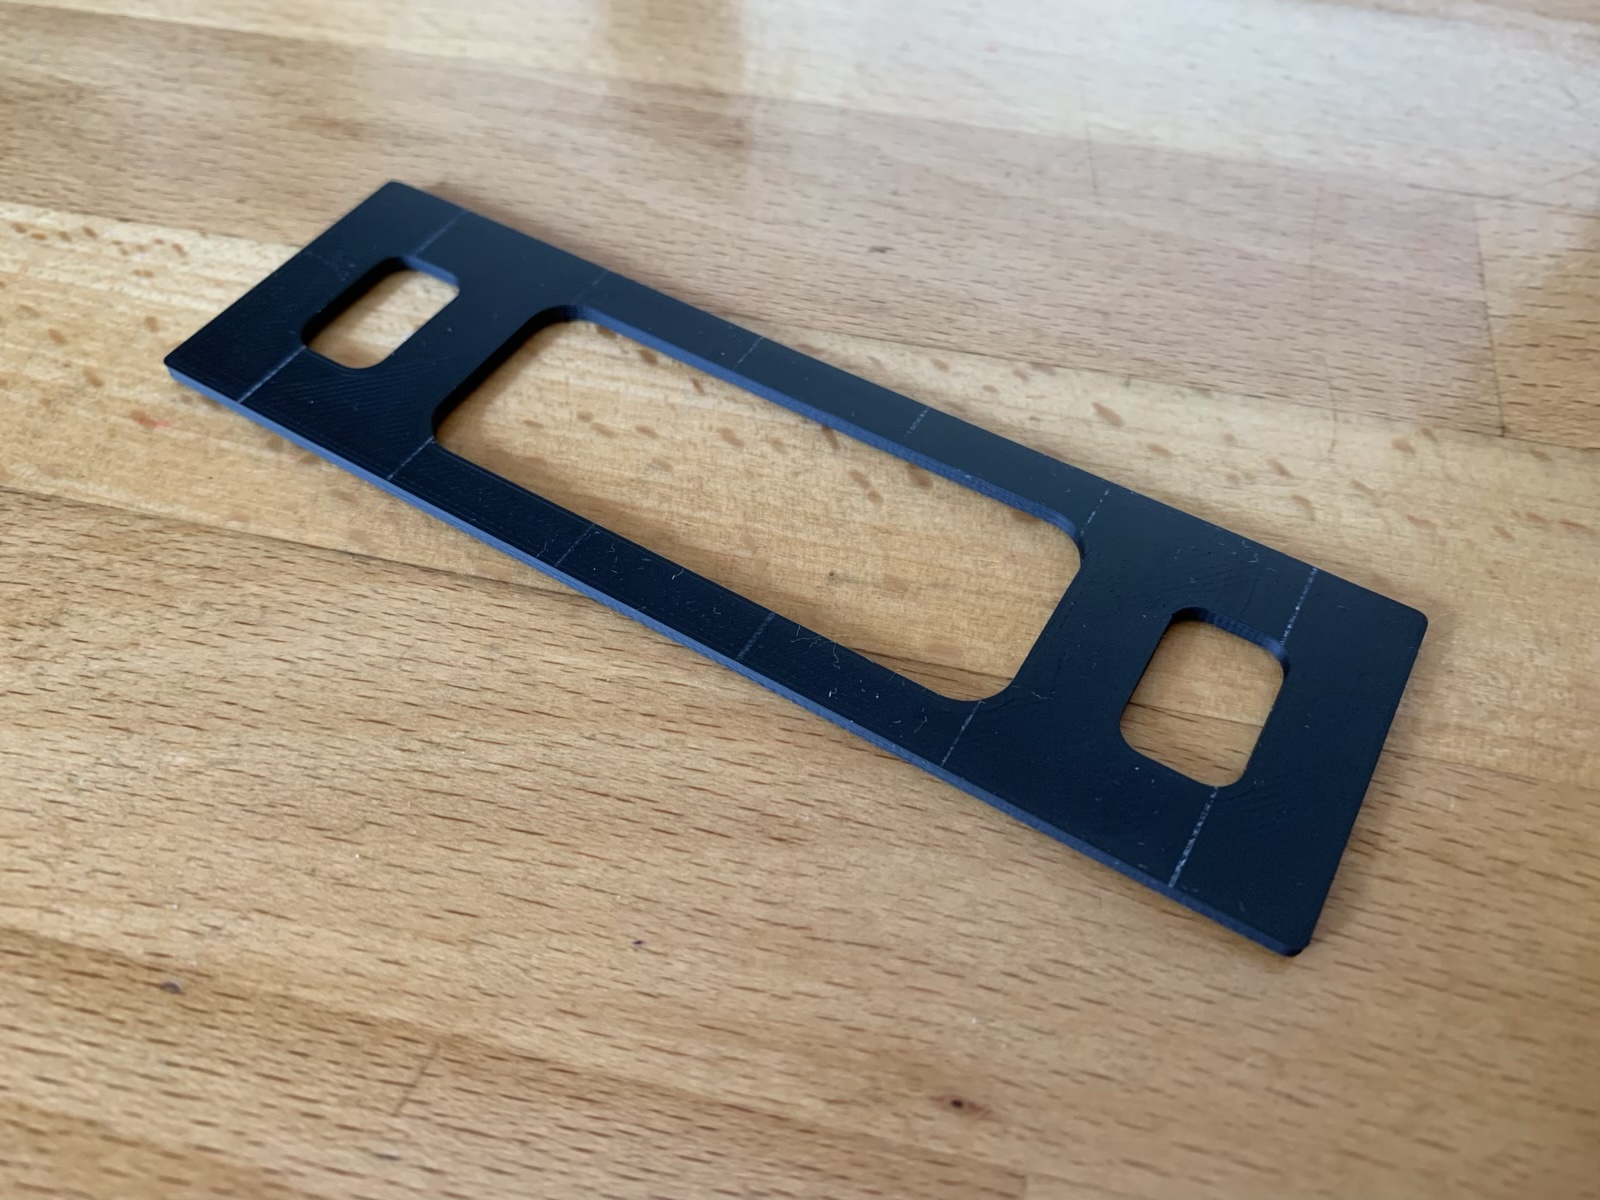 Flat mount plate for Eufy doorbell 2K